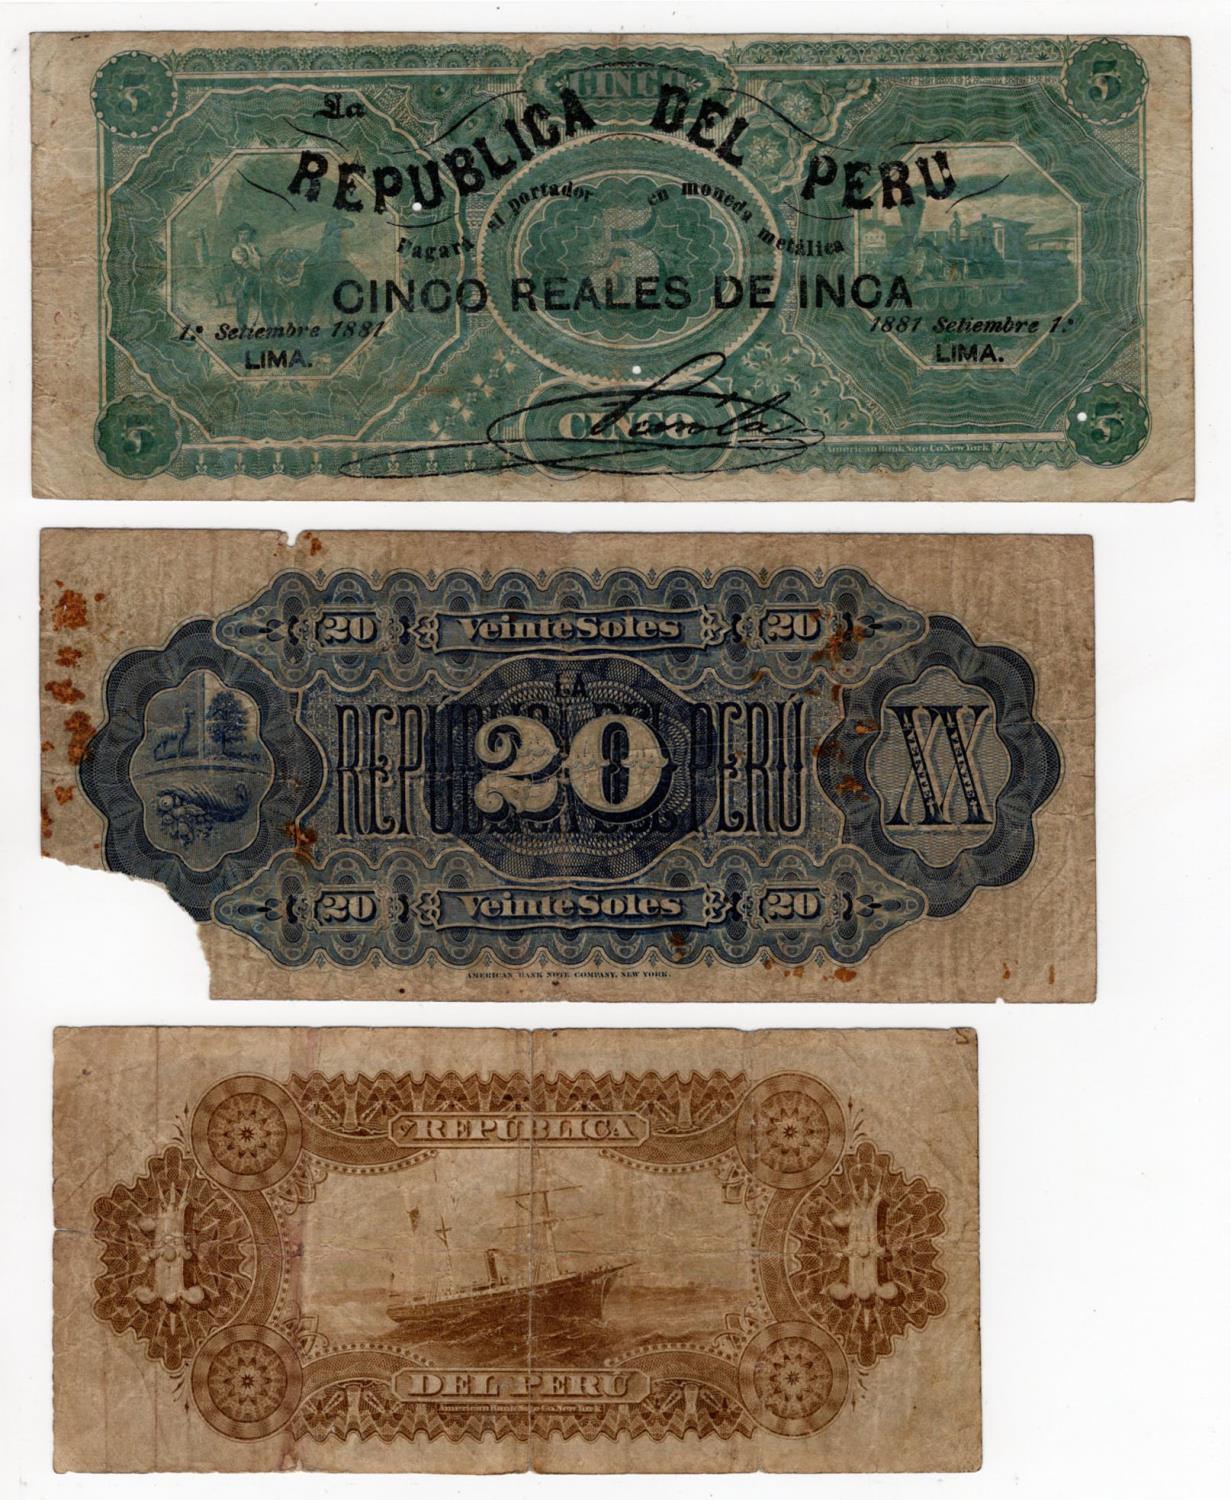 Peru (3), 5 Reales de Inca overprint on 5 Soles dated 1881 (original date 1873) serial 25614 plate C - Image 2 of 2